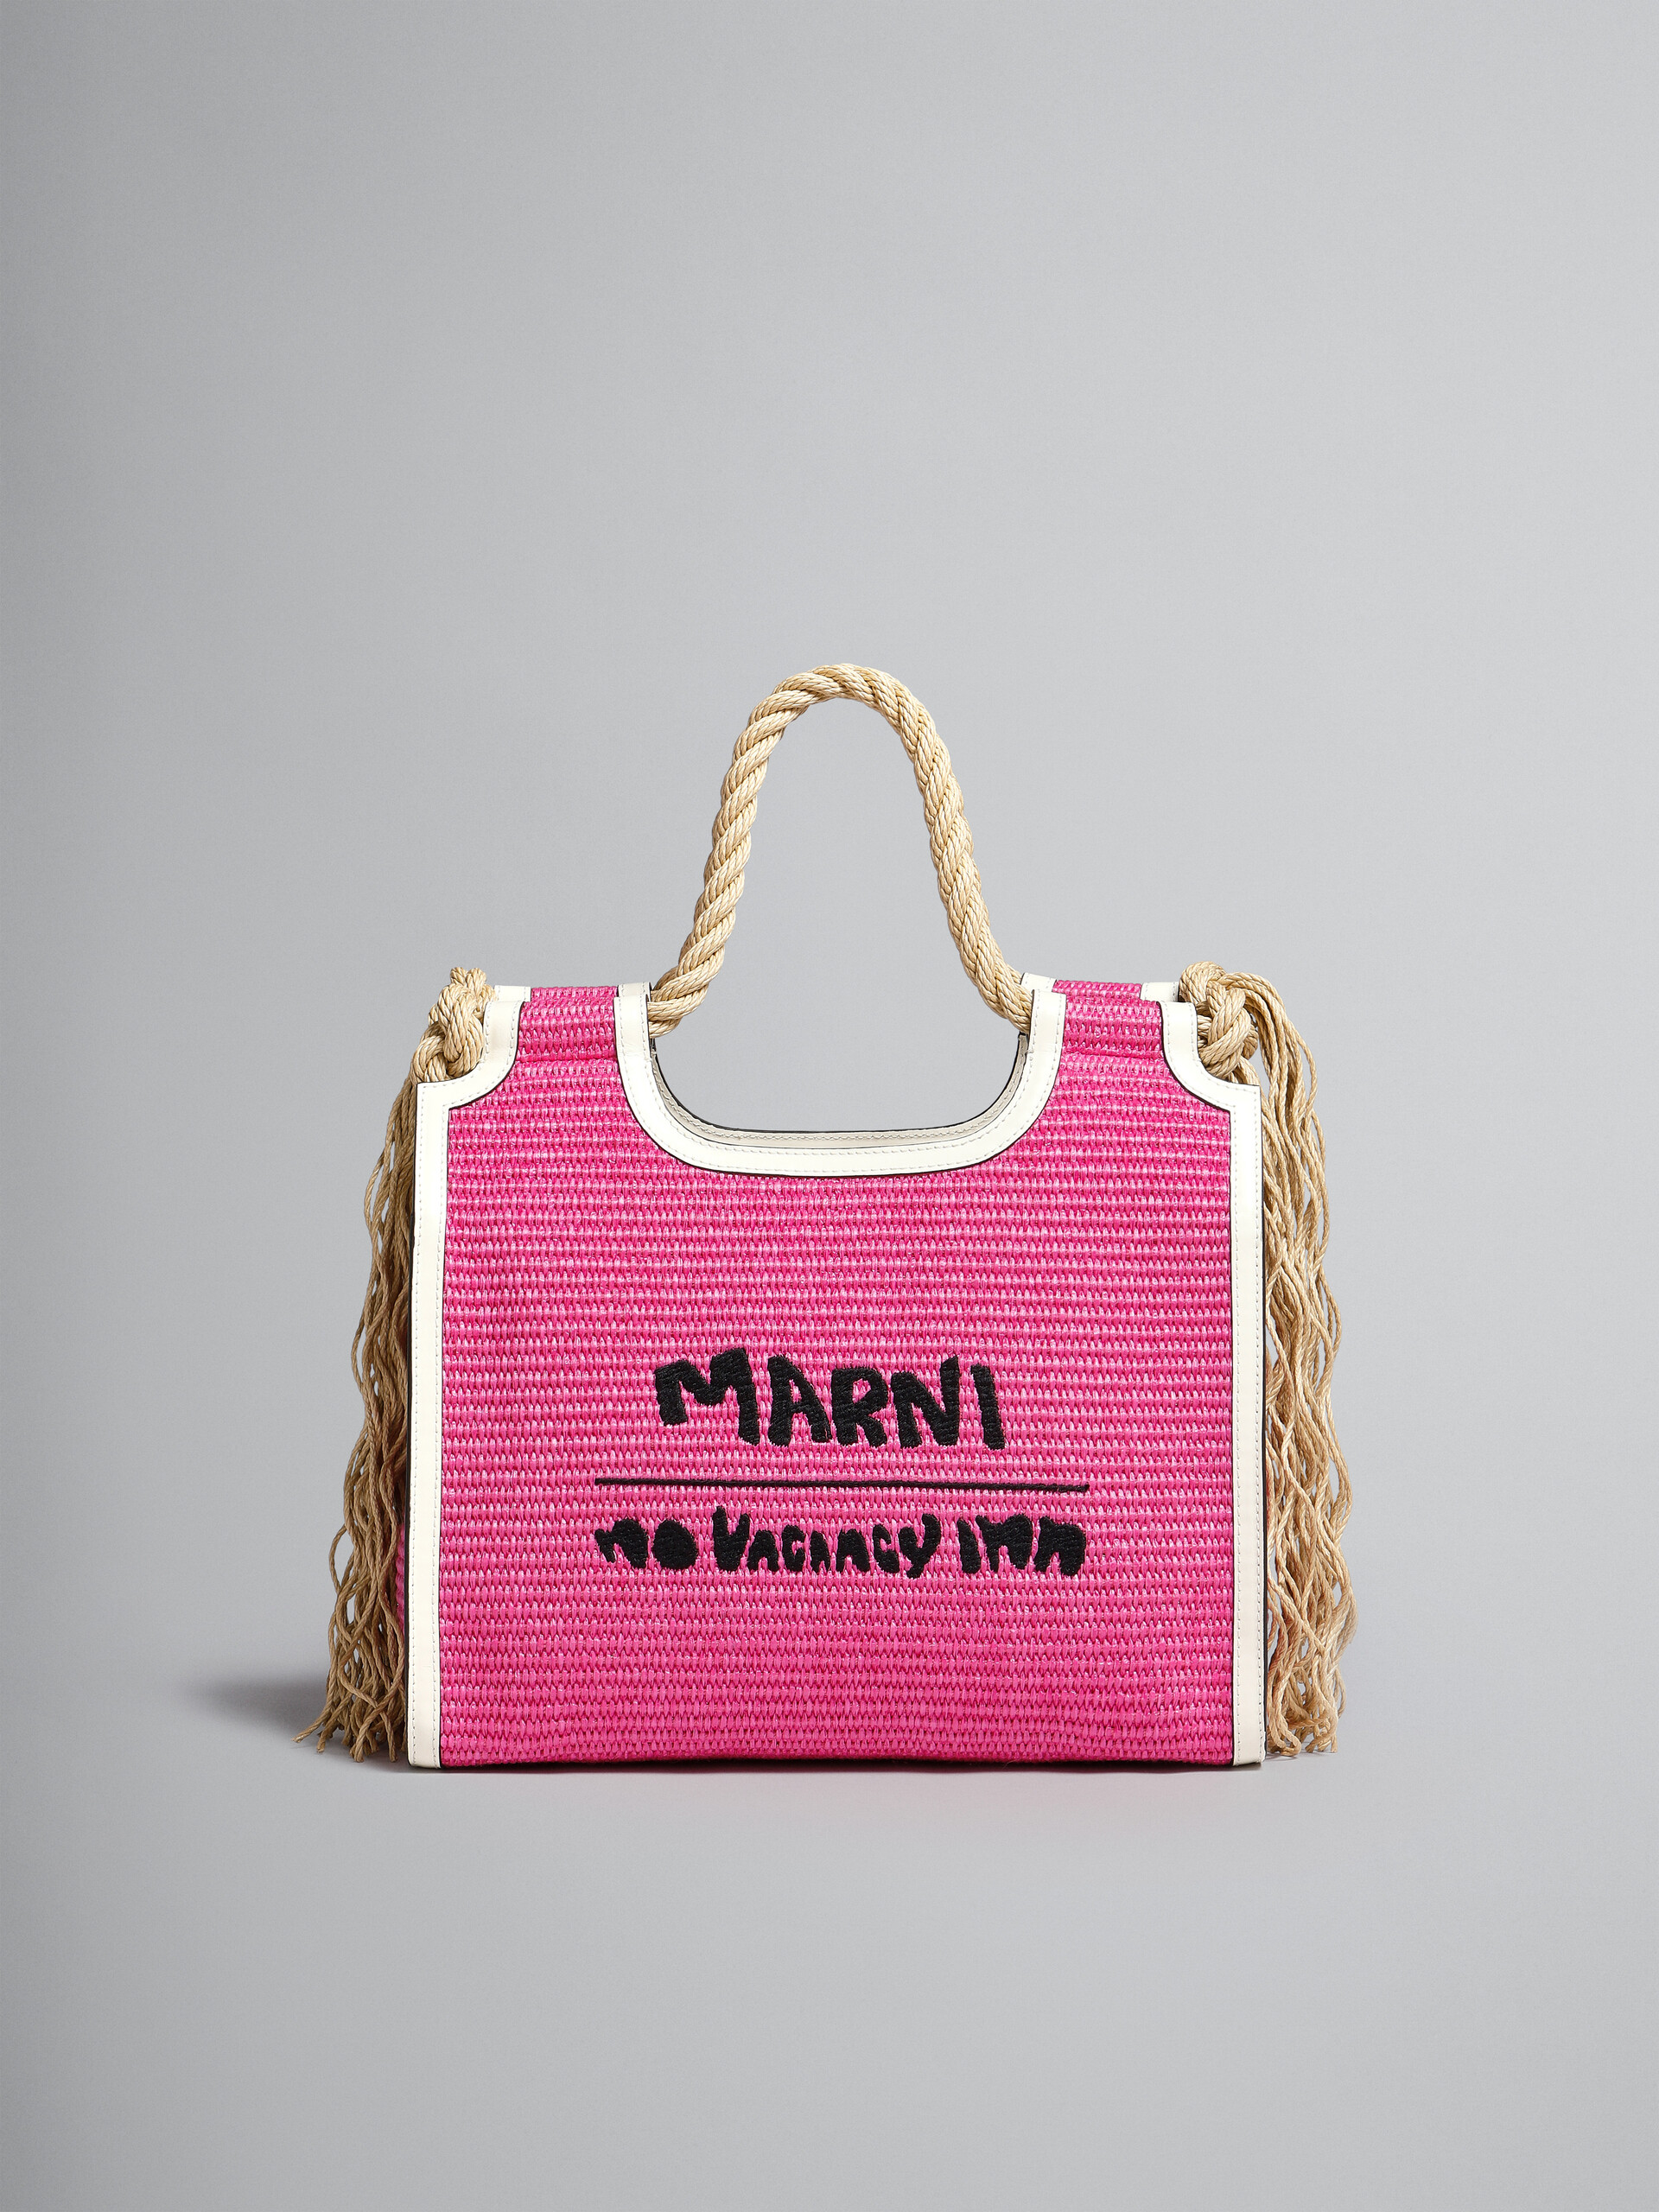 Marni x No Vacancy Inn - Marcel Tote Bag in pink raffia with white trims - Handbag - Image 1